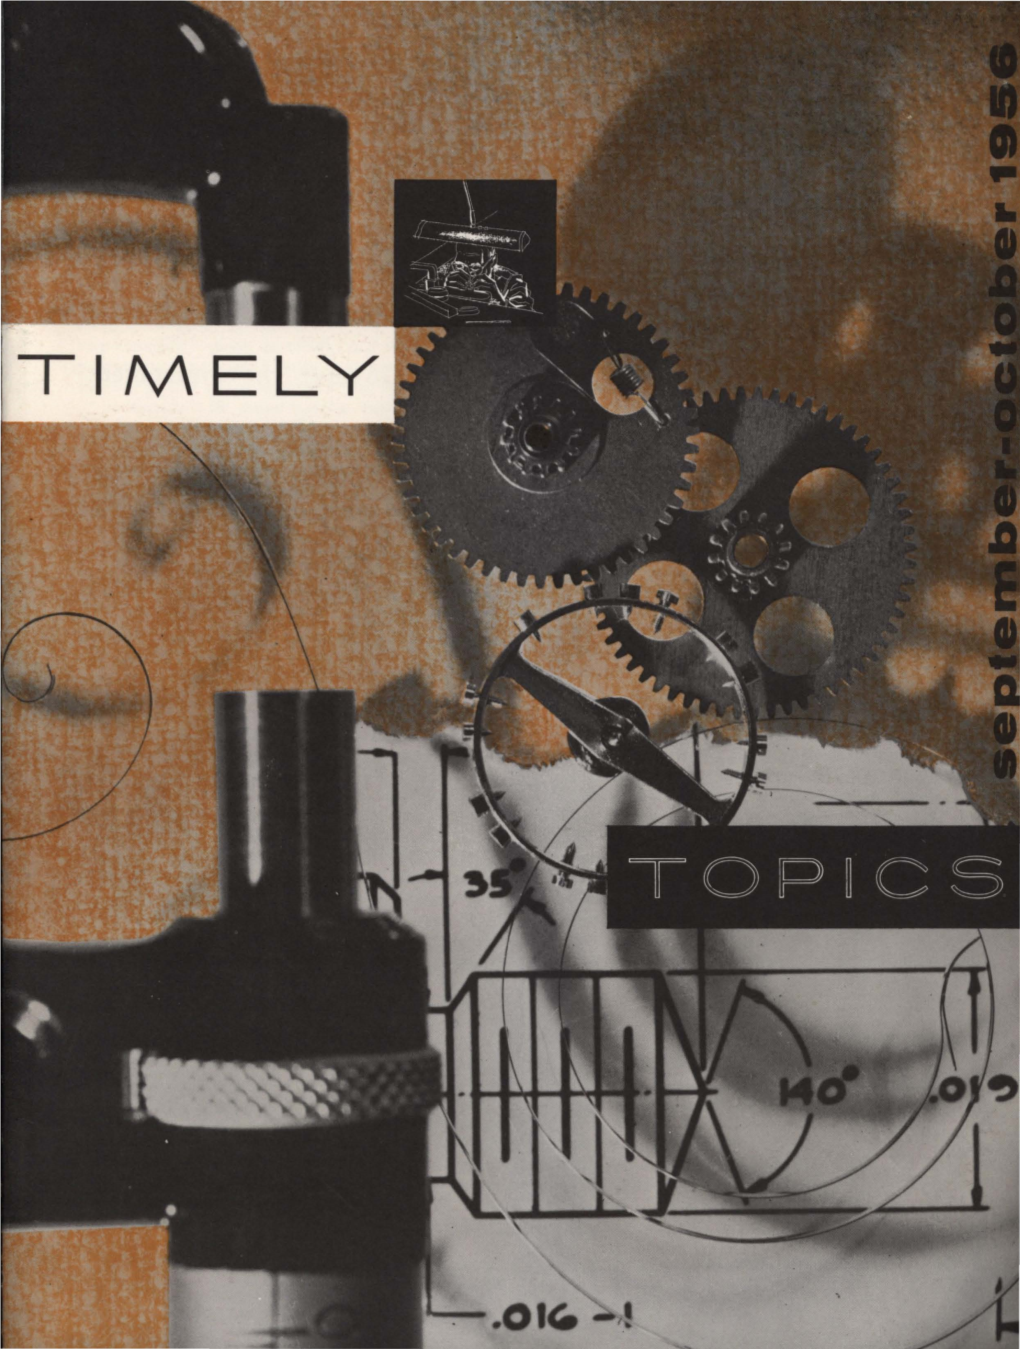 Timelytopics 1956 Sept Oct.Pdf